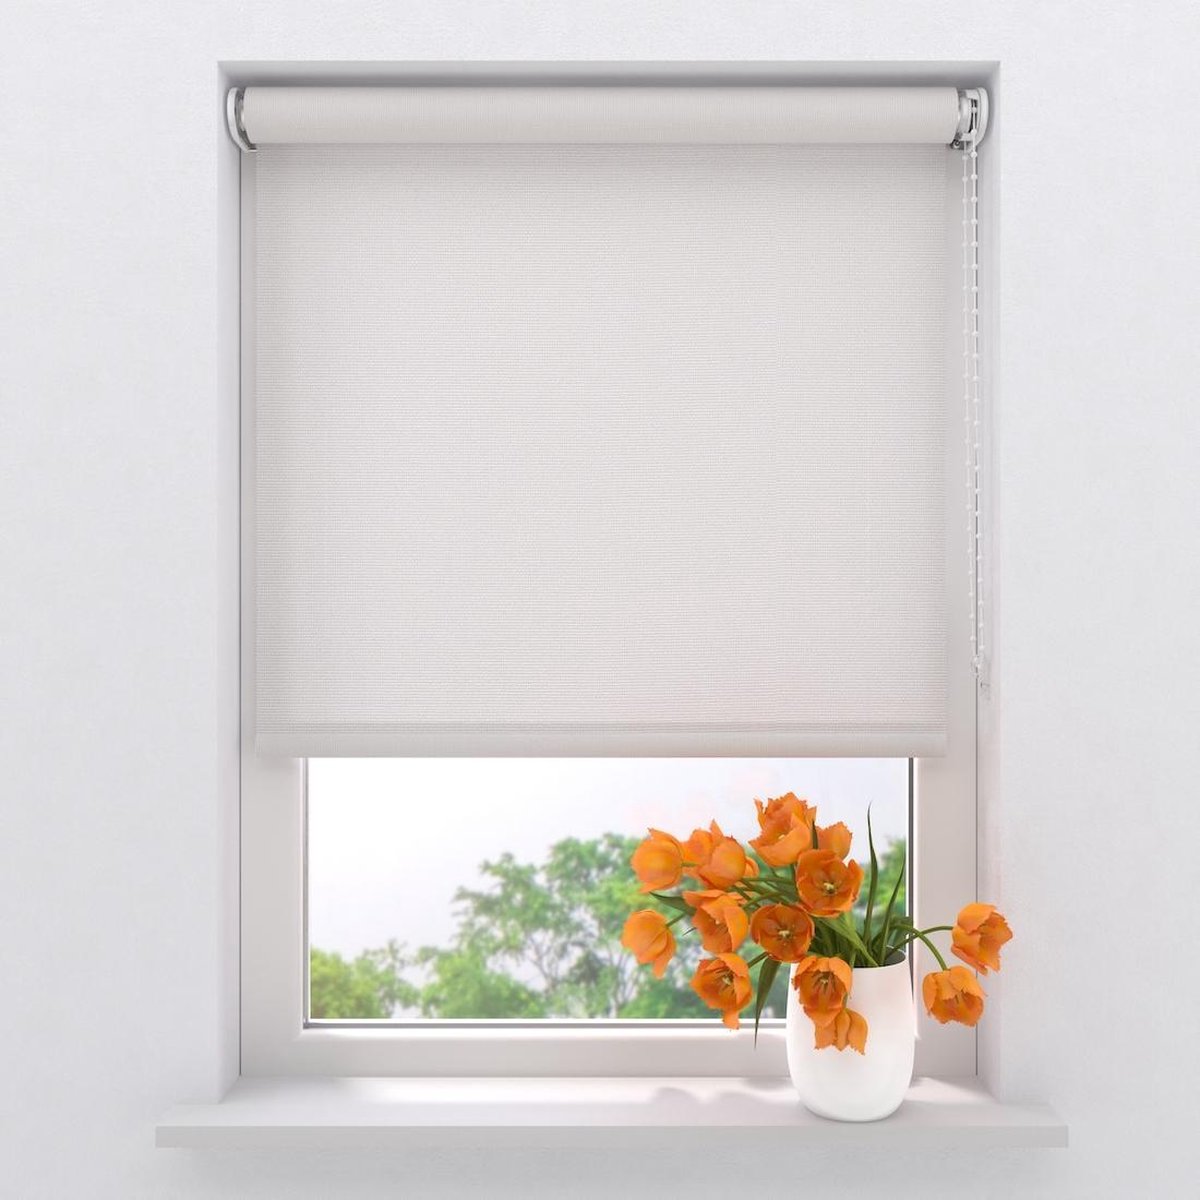 Rolgordijn Easy Lichtdoorlatend - Bright White - 200 x 190 cm